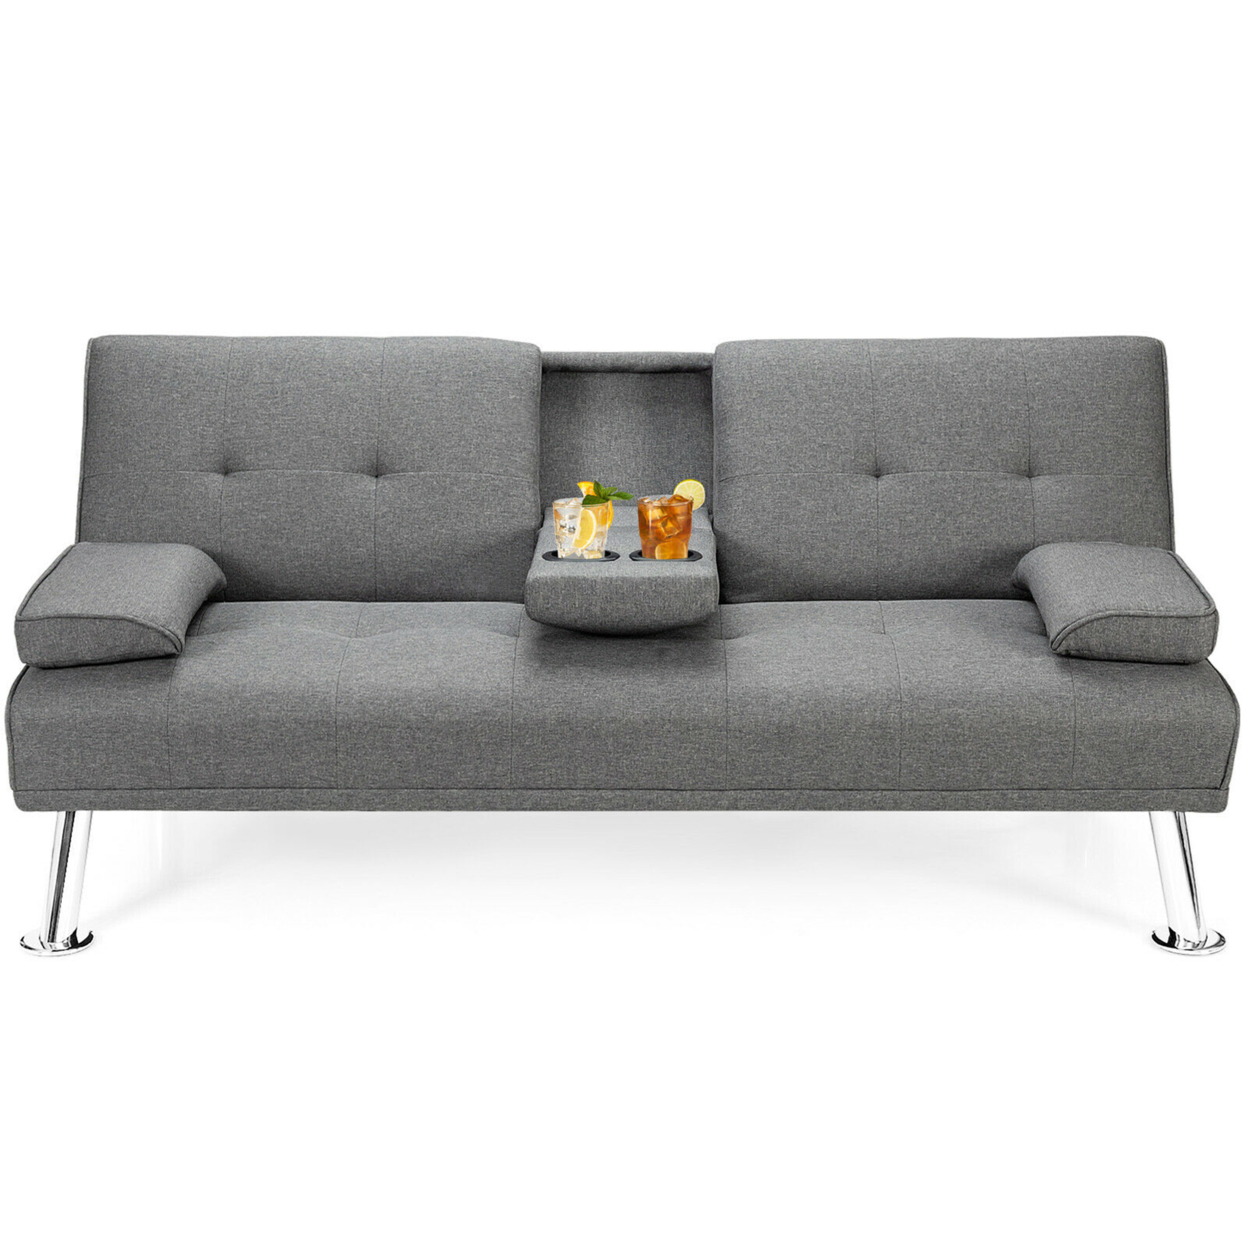 Fabric Folding Convertible Futon Sofa Bed With 2 Cup Holders Dark/Light Gray - Light Gray